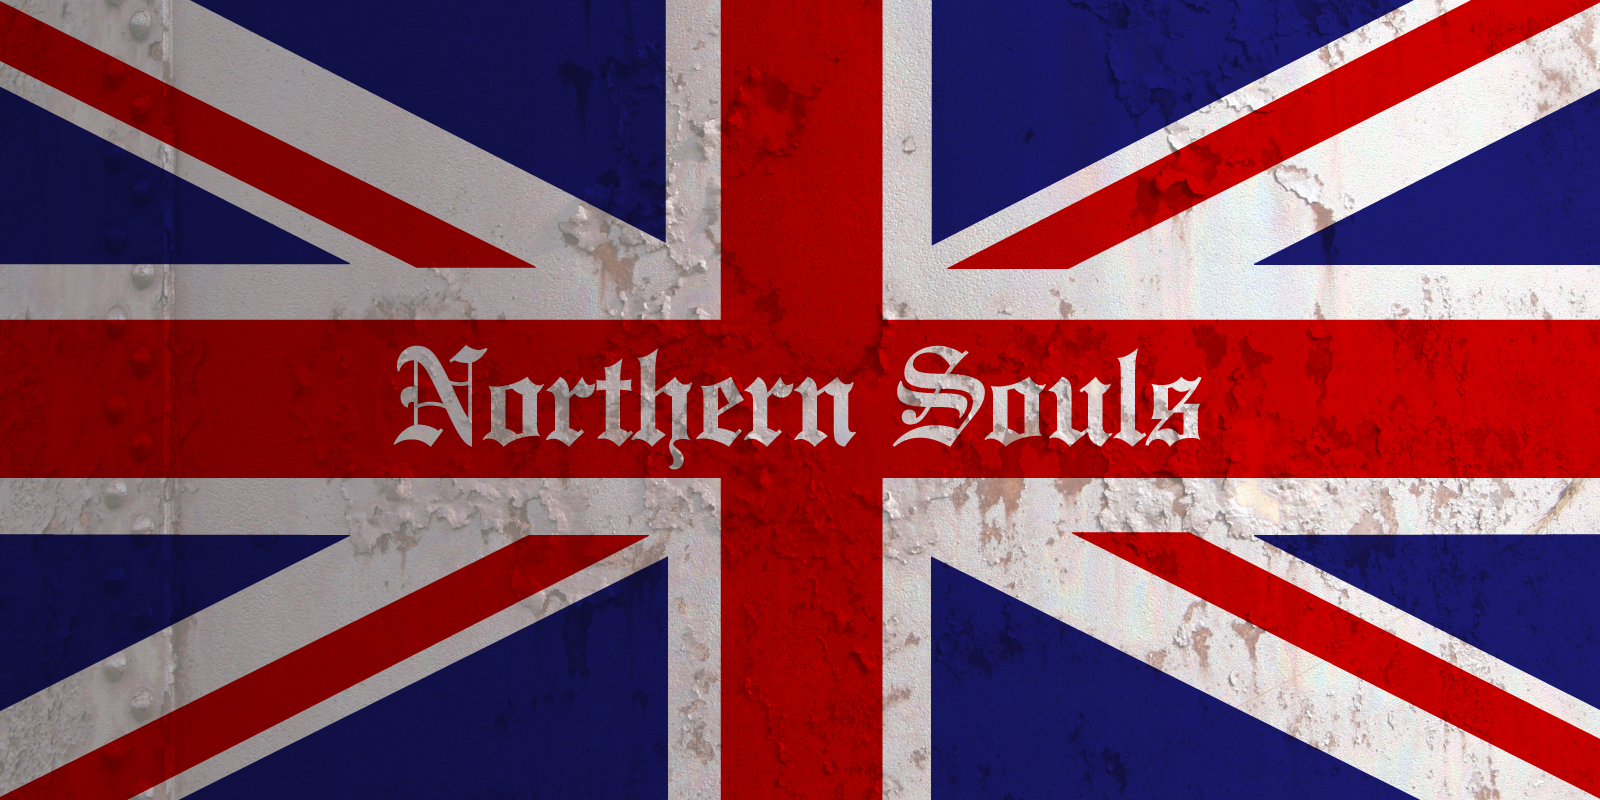 Northern Souls